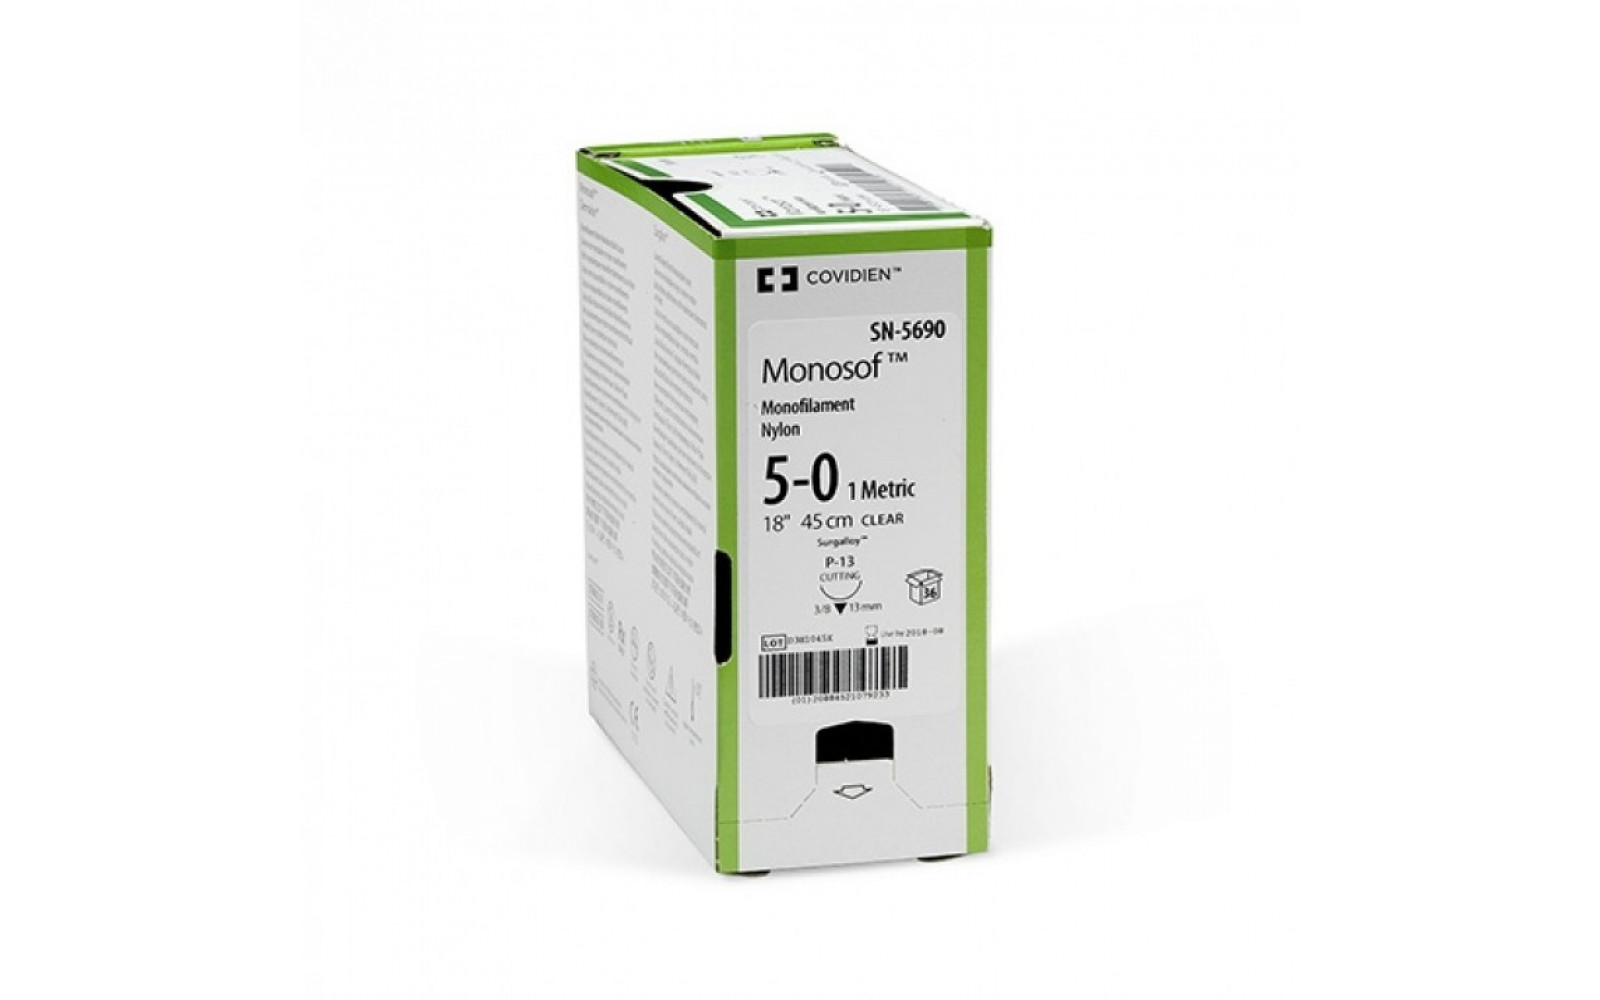 Monosof™ Monofilament Nylon Sutures (Medtronic)